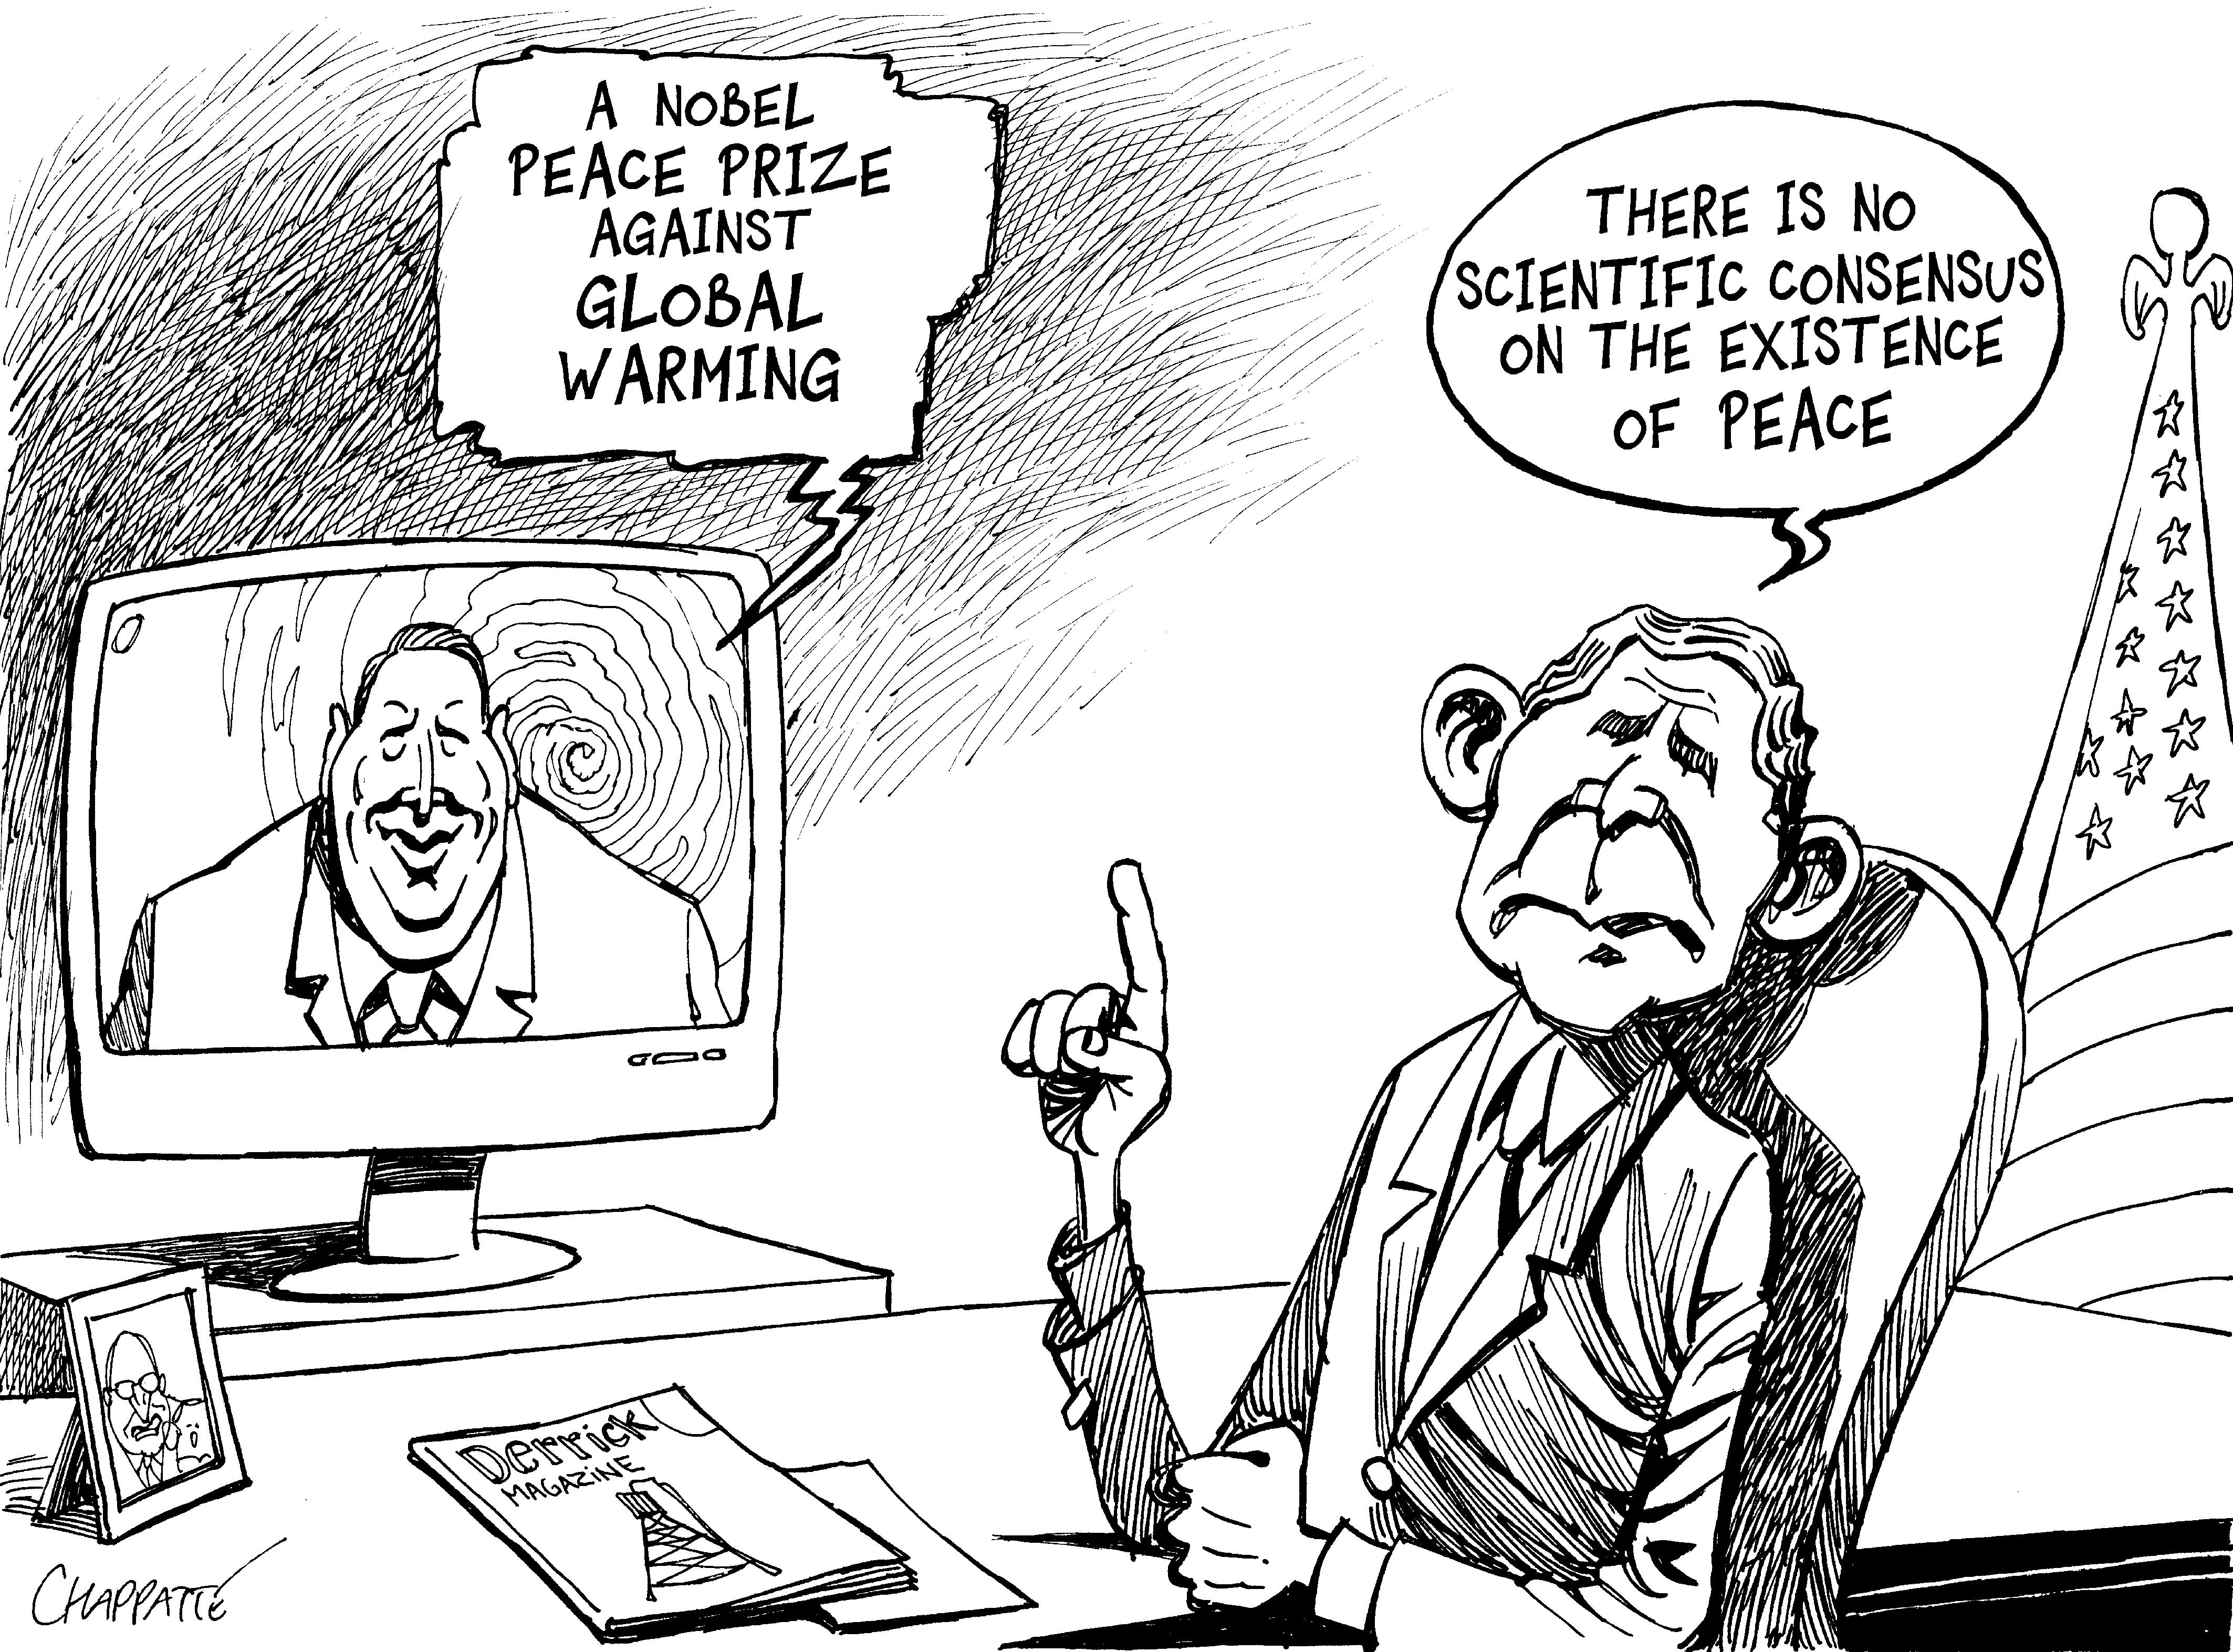 Gore wins the Nobel